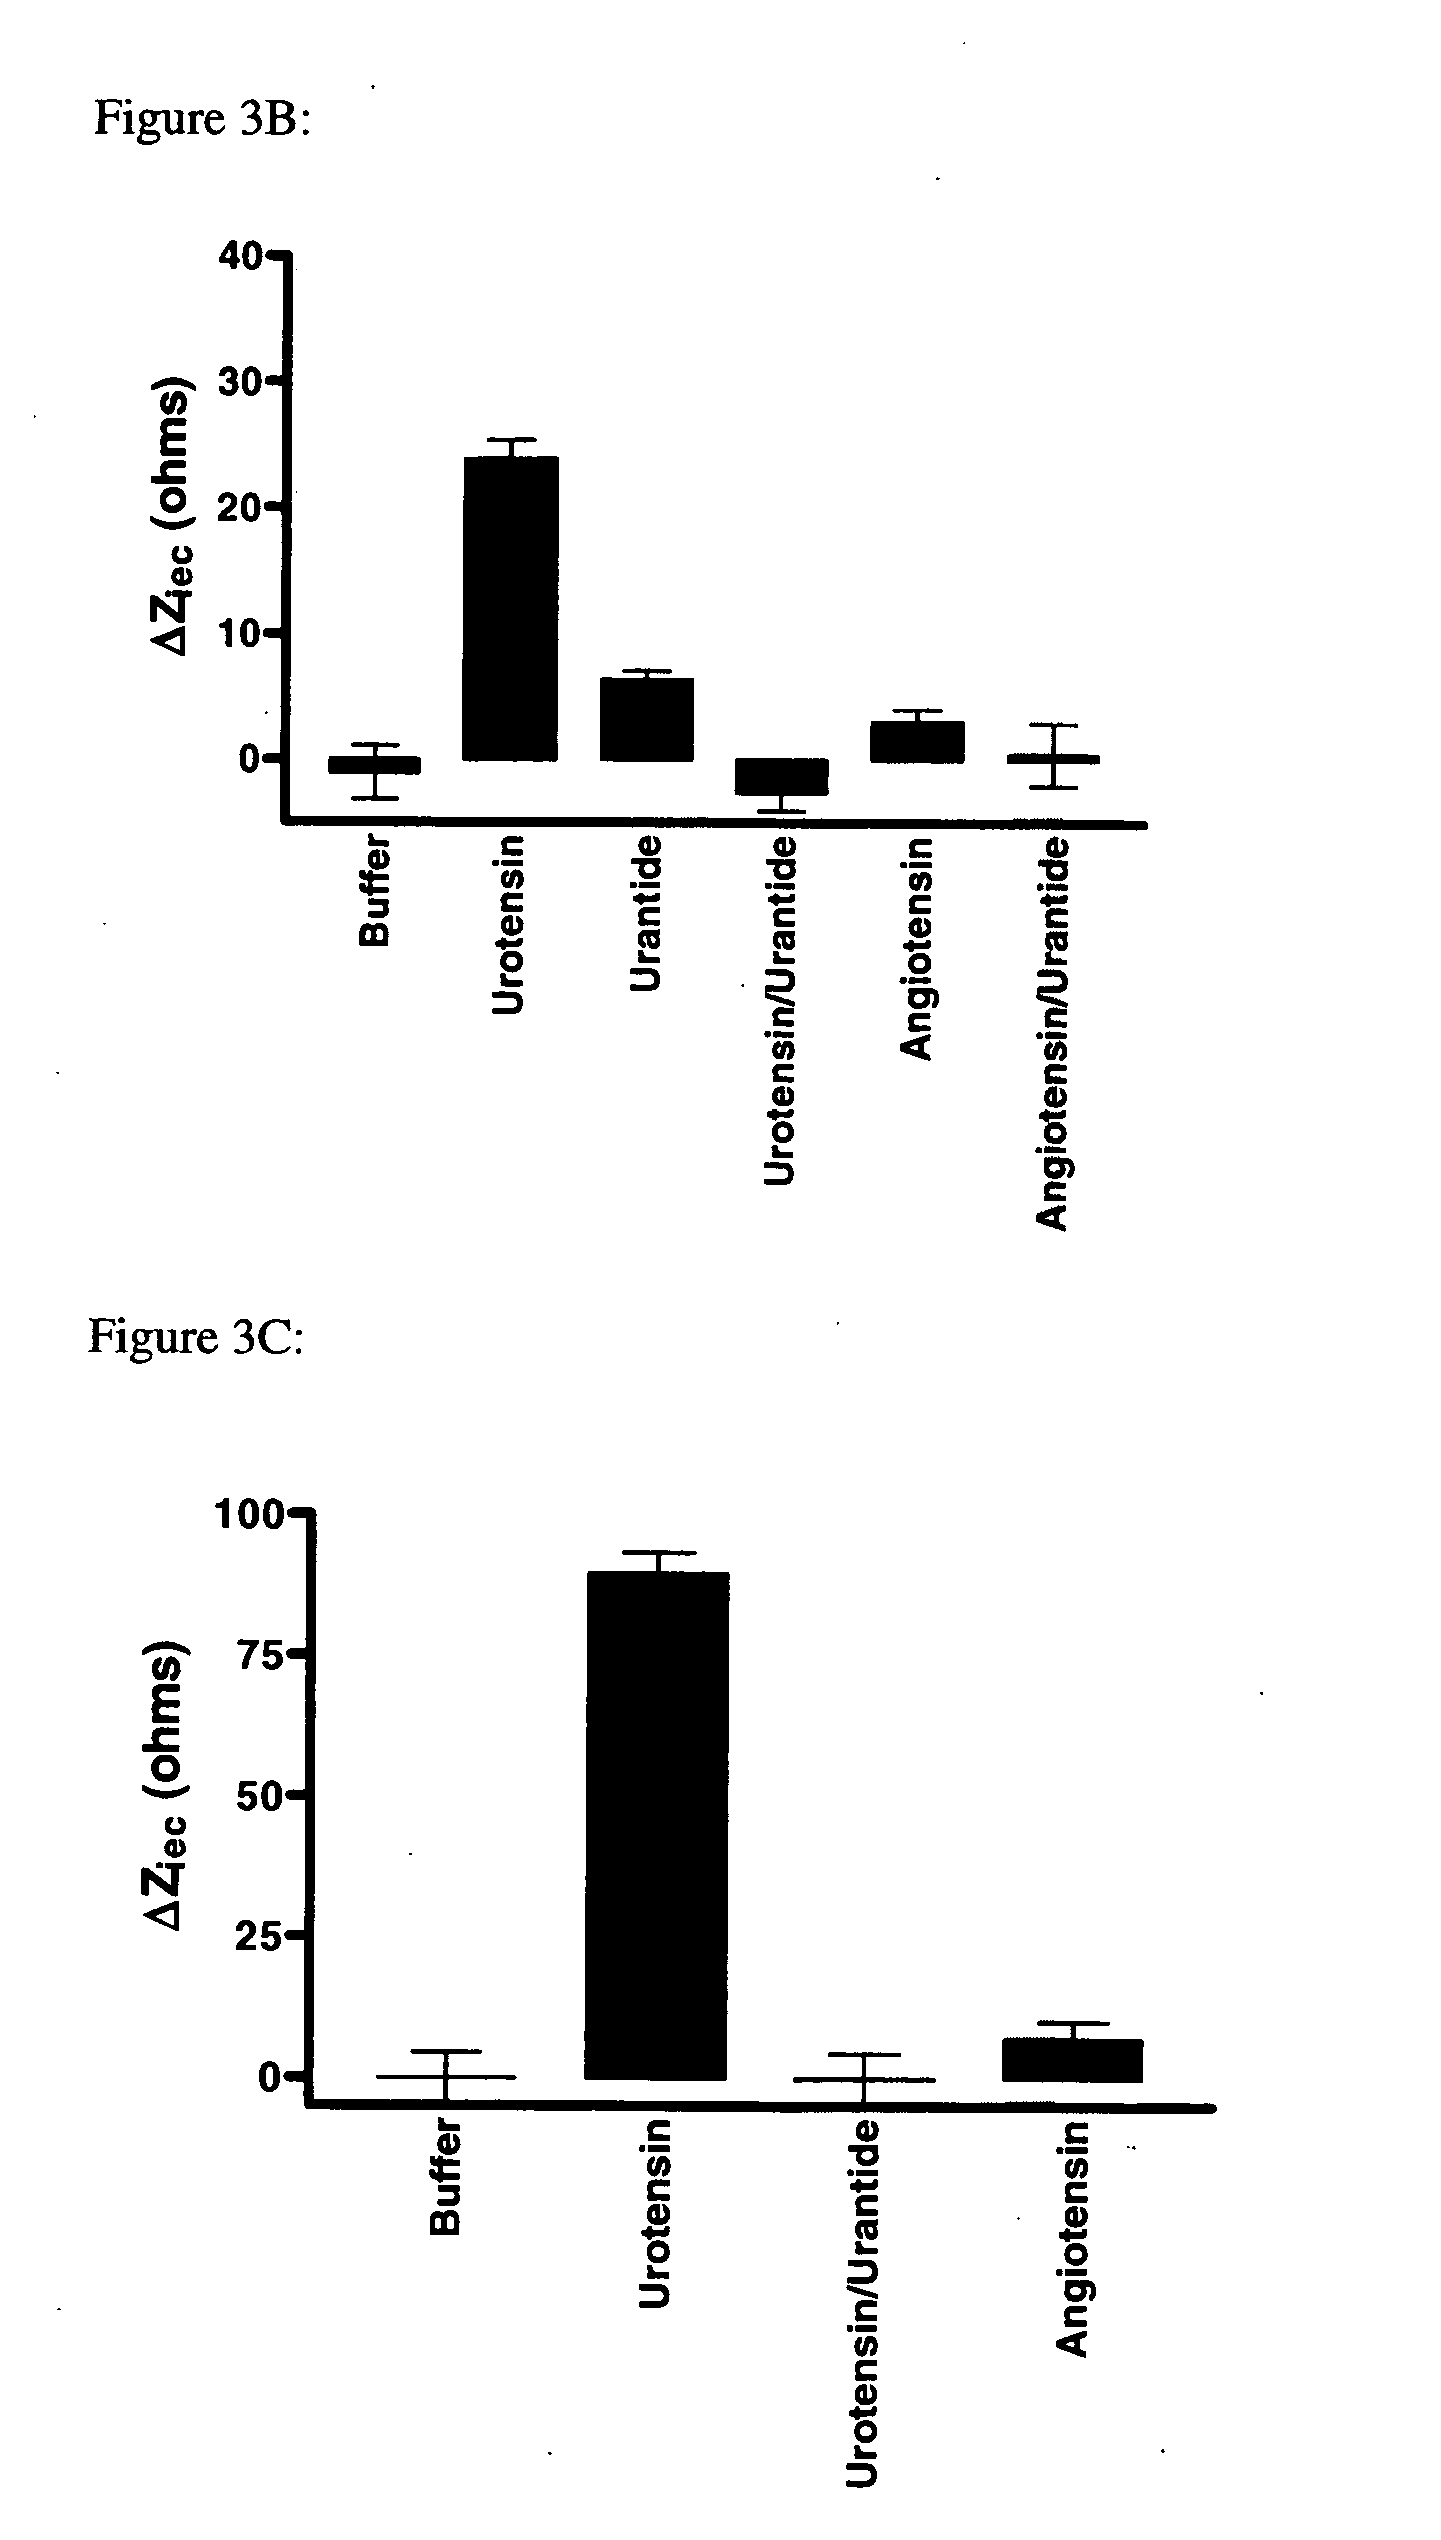 Method of measuring the biological activity of an urotensin II receptor